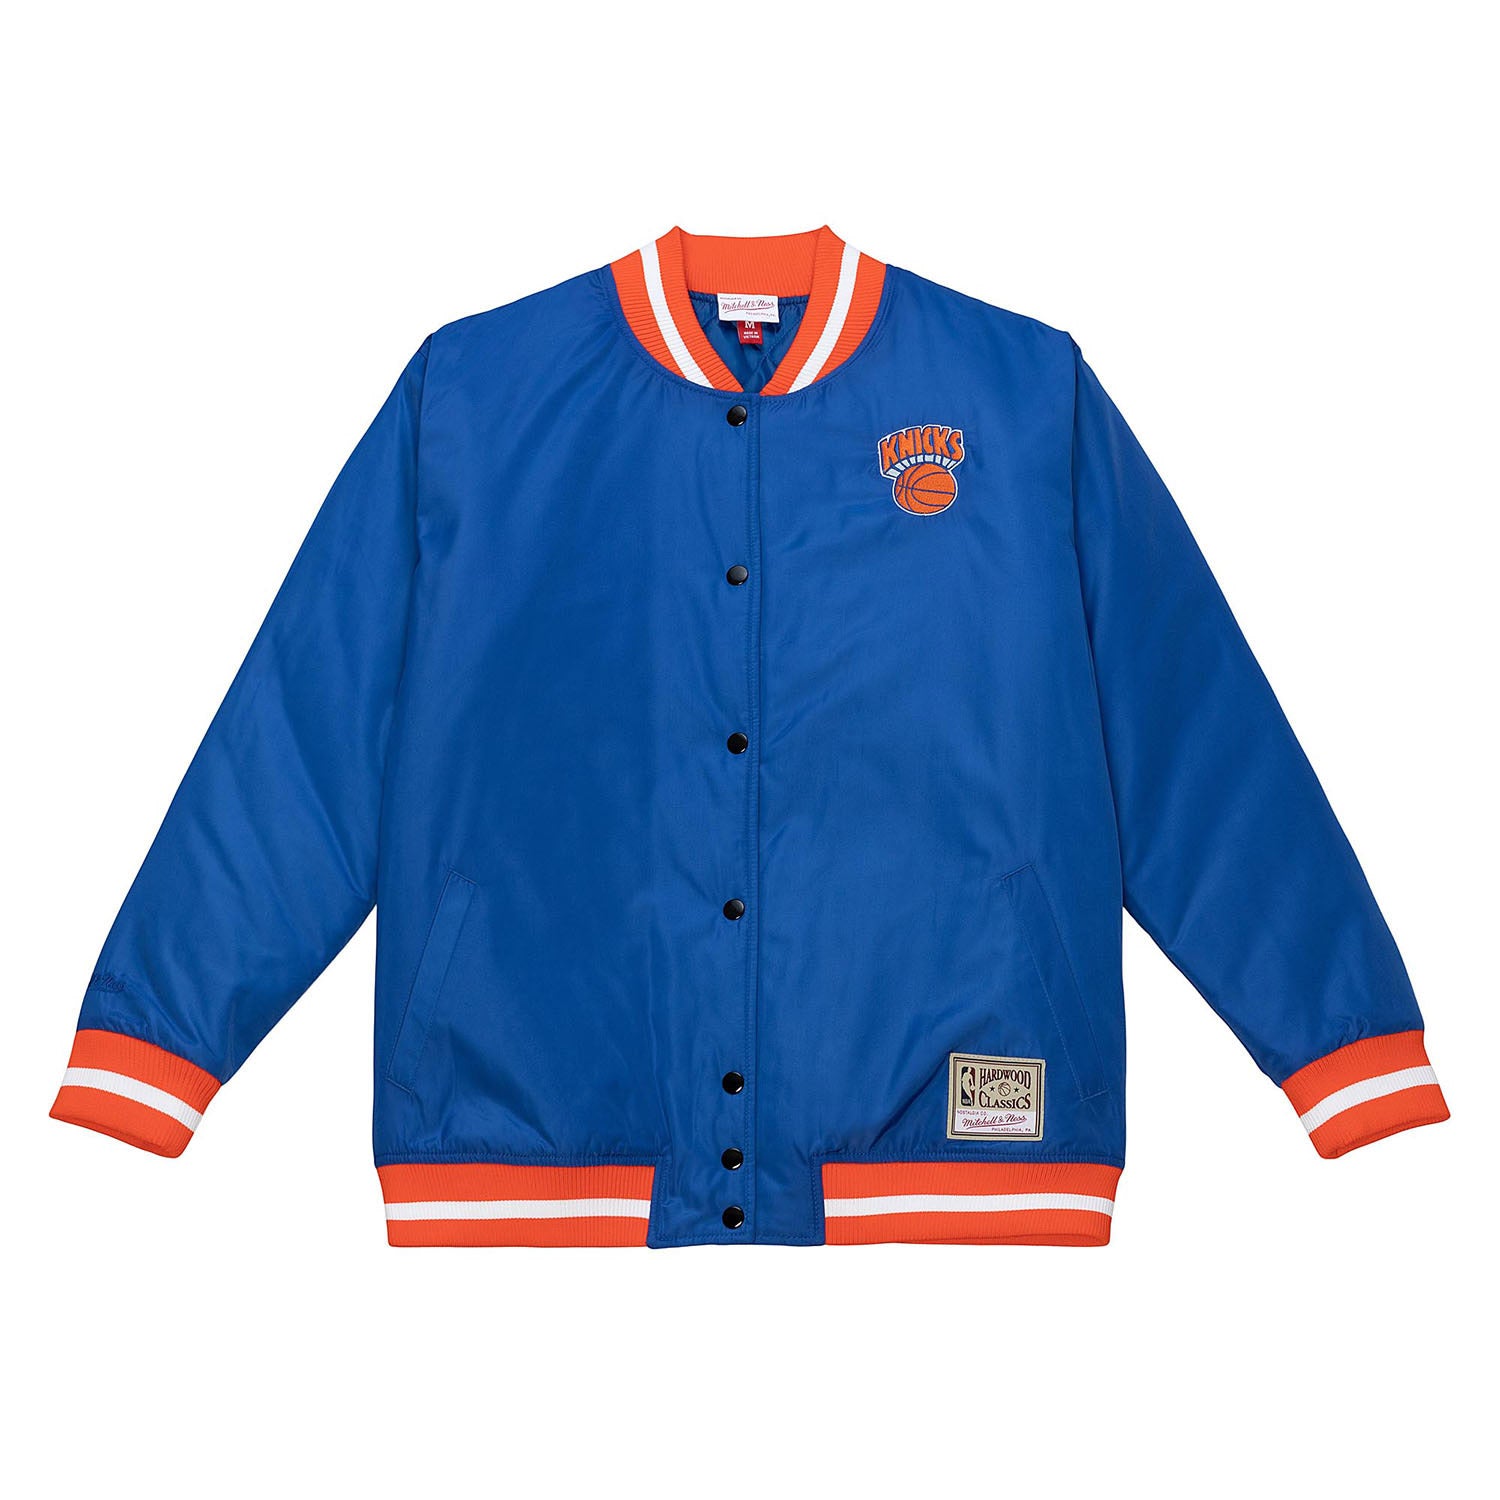 Women's Mitchell & Ness Knicks Puffer Jacket In Blue & Orange - Front View